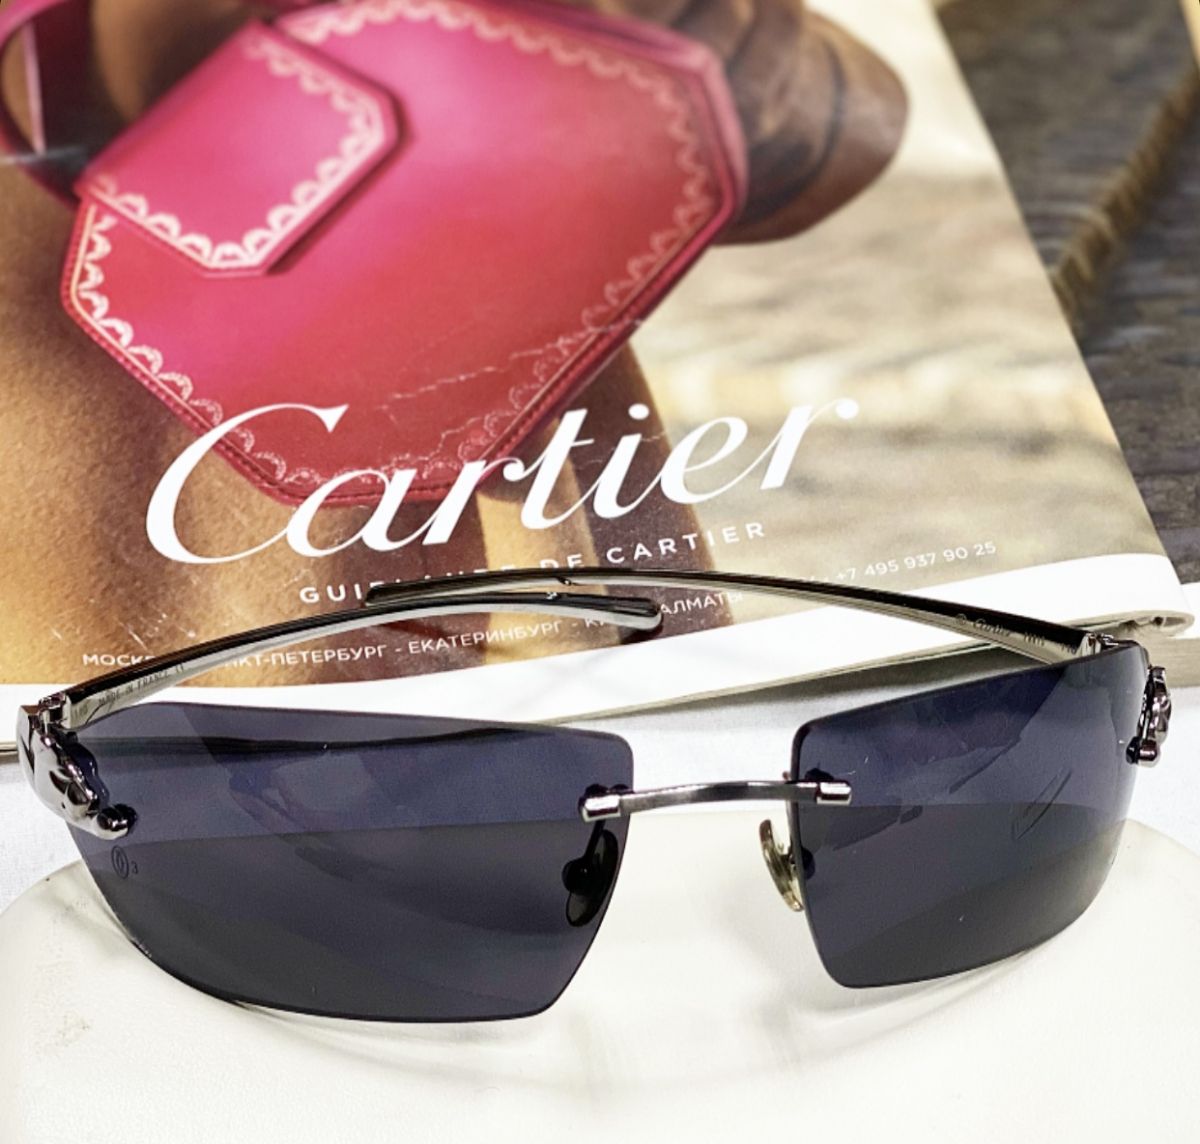 Очки Cartier цена 38 463 руб 